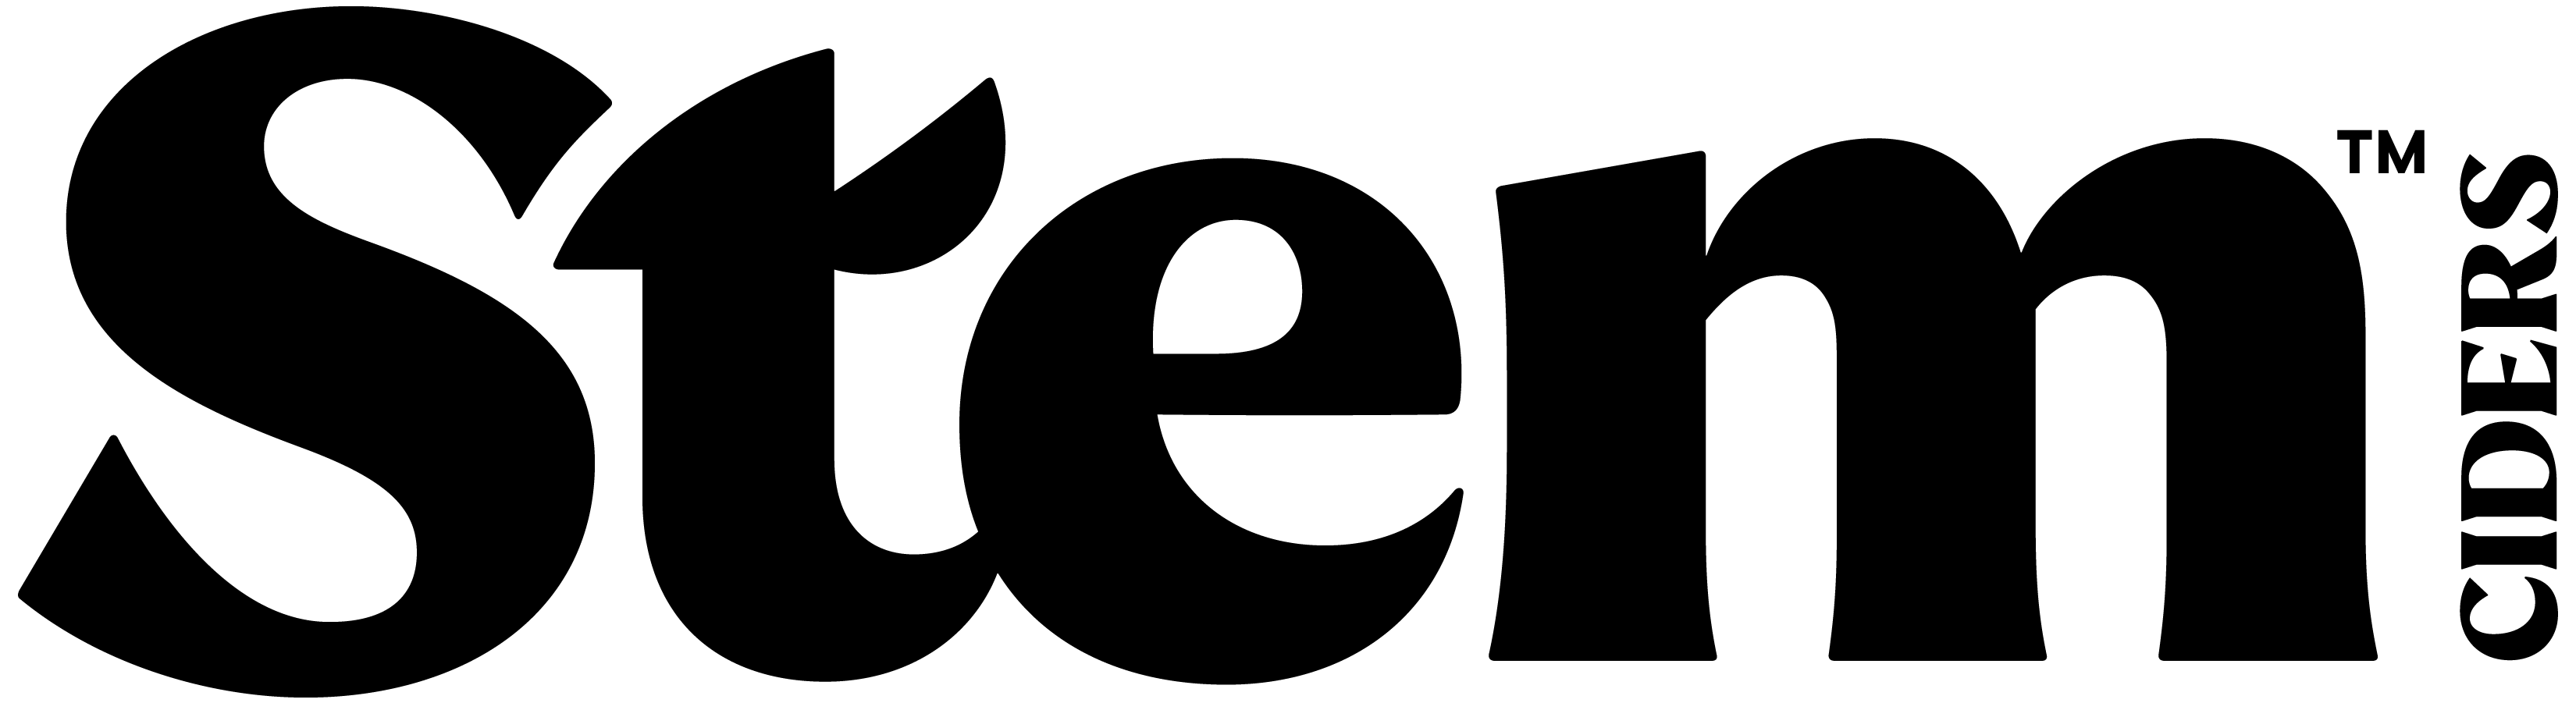 Black logo that reads, "Stem Ciders"